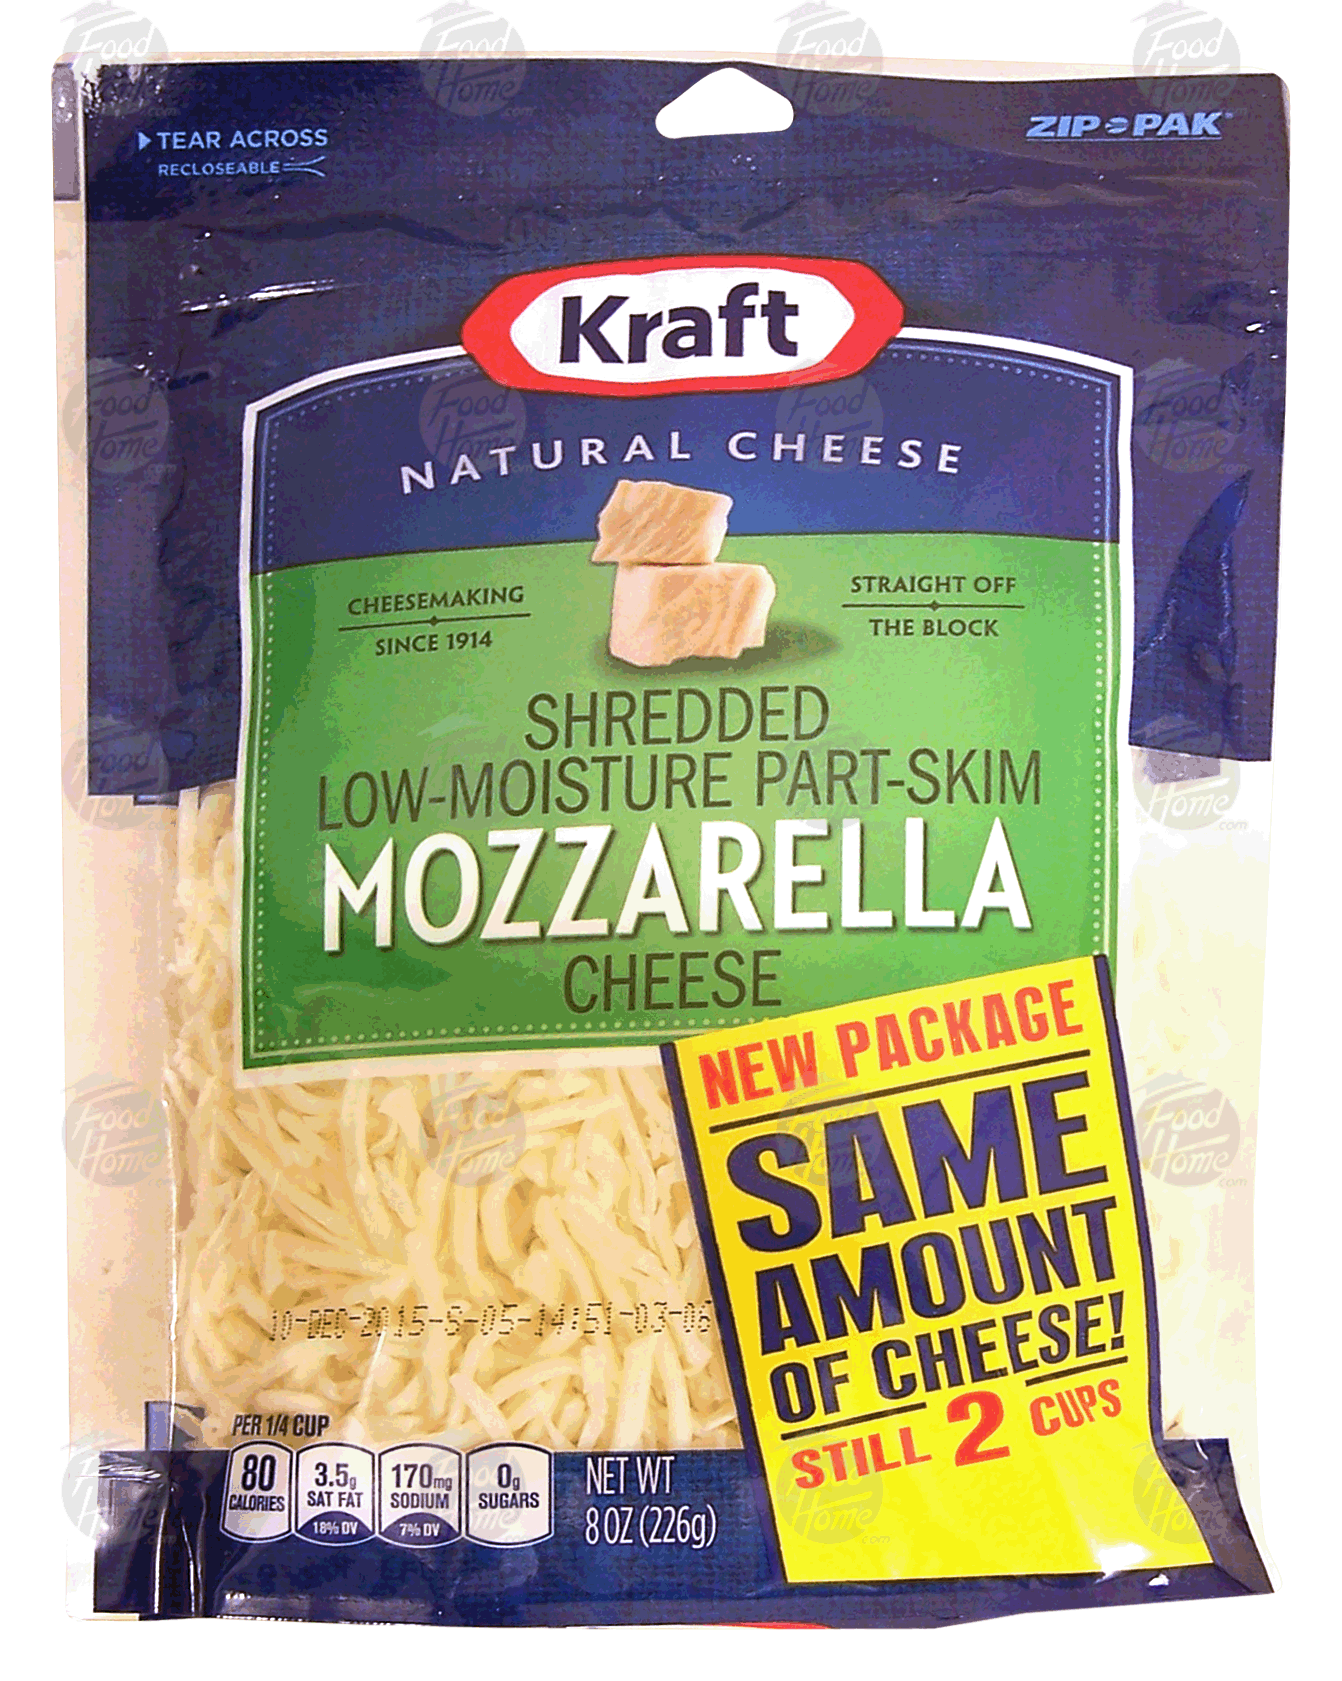 Kraft Natural Cheese mozzarella shredded cheese, low-moisture part-skim Full-Size Picture